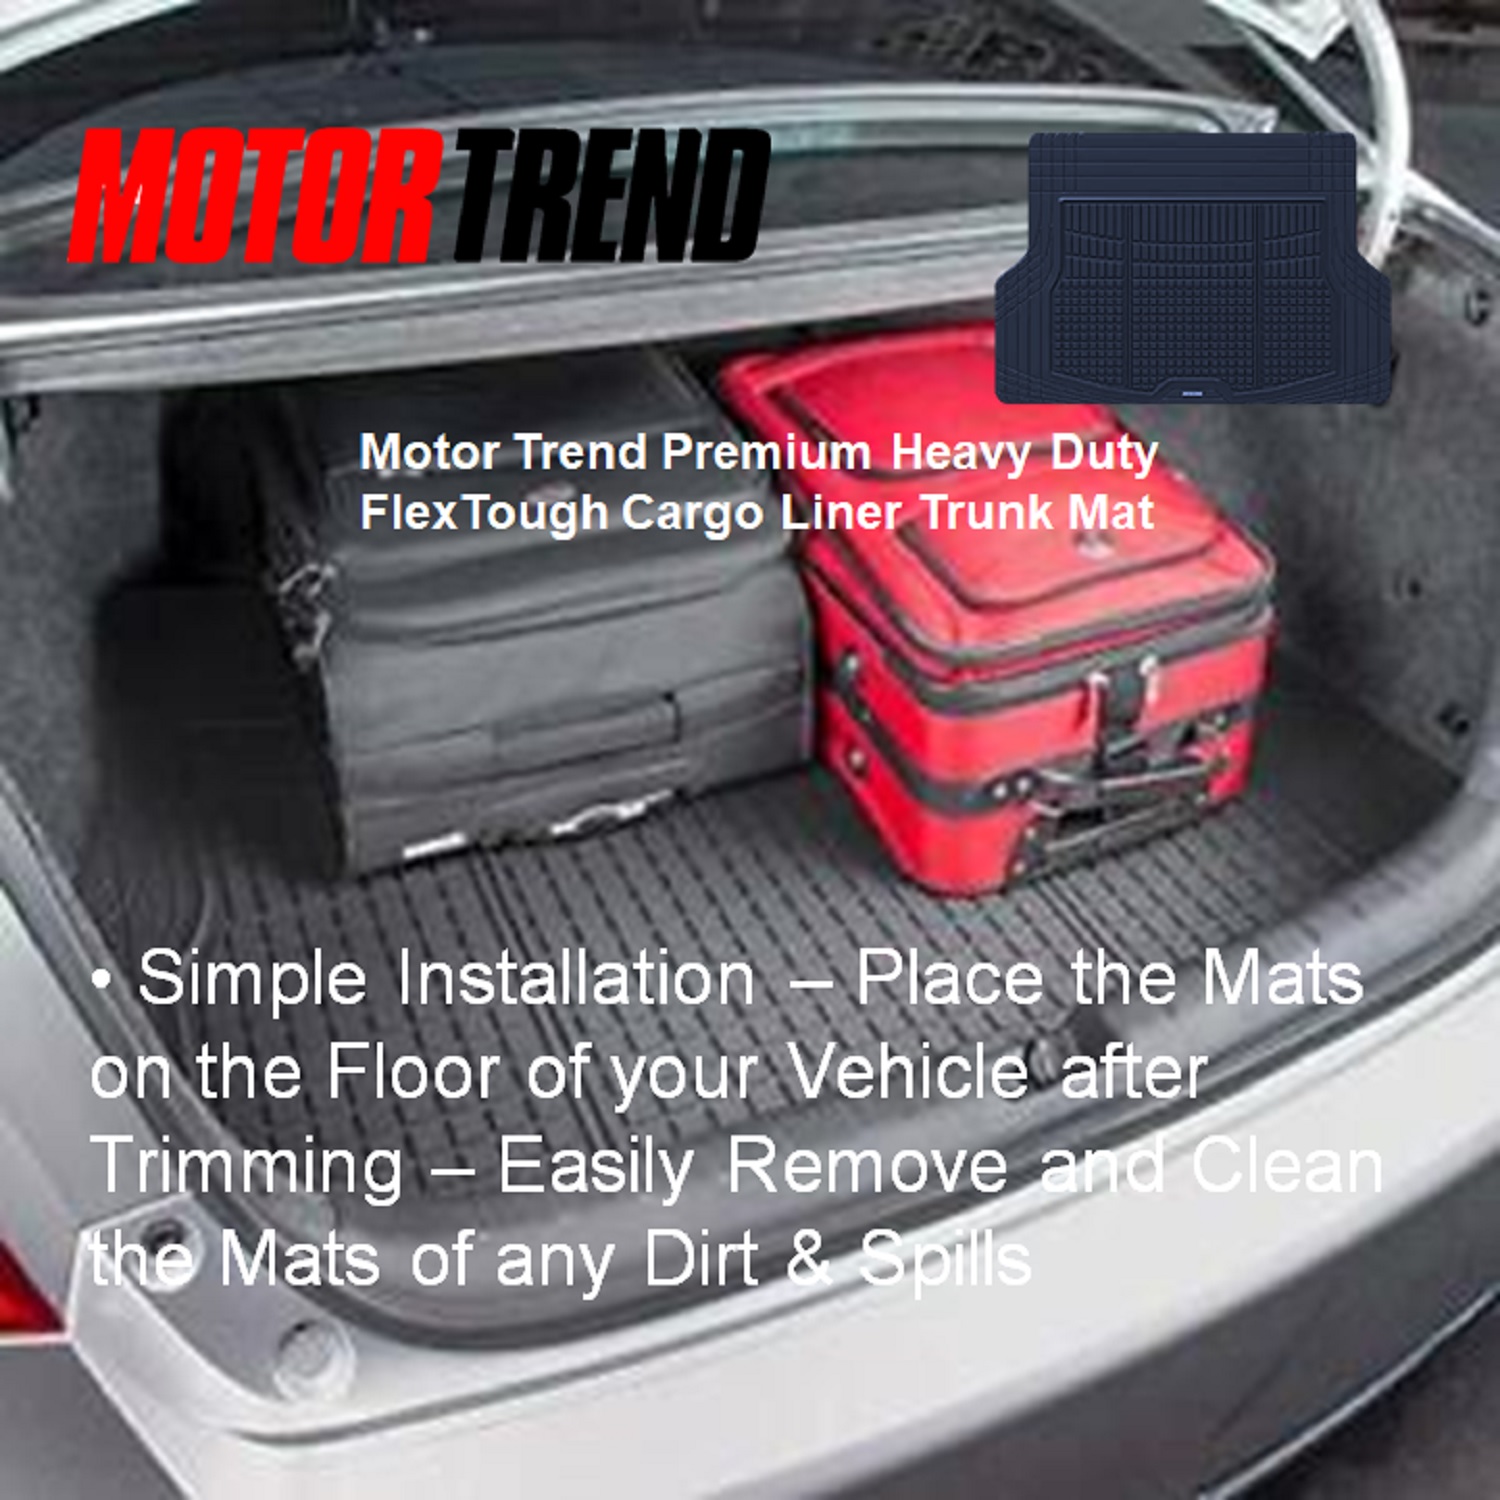 Motor Trend Premium Heavy Duty Flex Tough Cargo Liner Trunk Mat, Flex Tough,  No-Slip Grip, Built for Protection, Designed for Compatibility, Simple  Installation